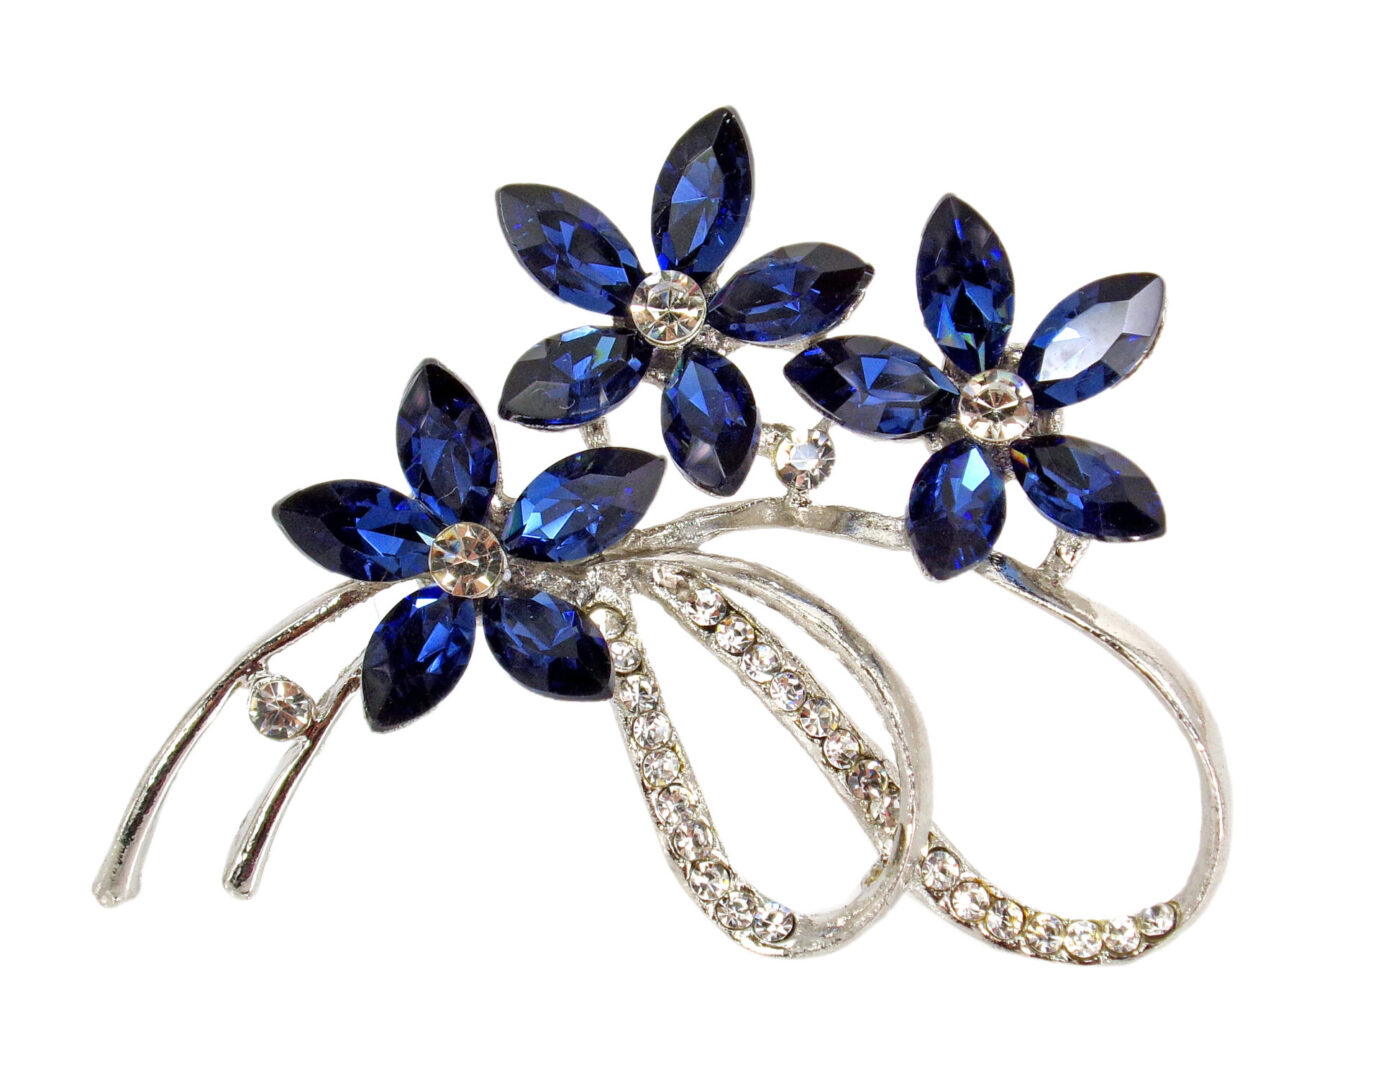 A blue crystal stone flower pin brooch